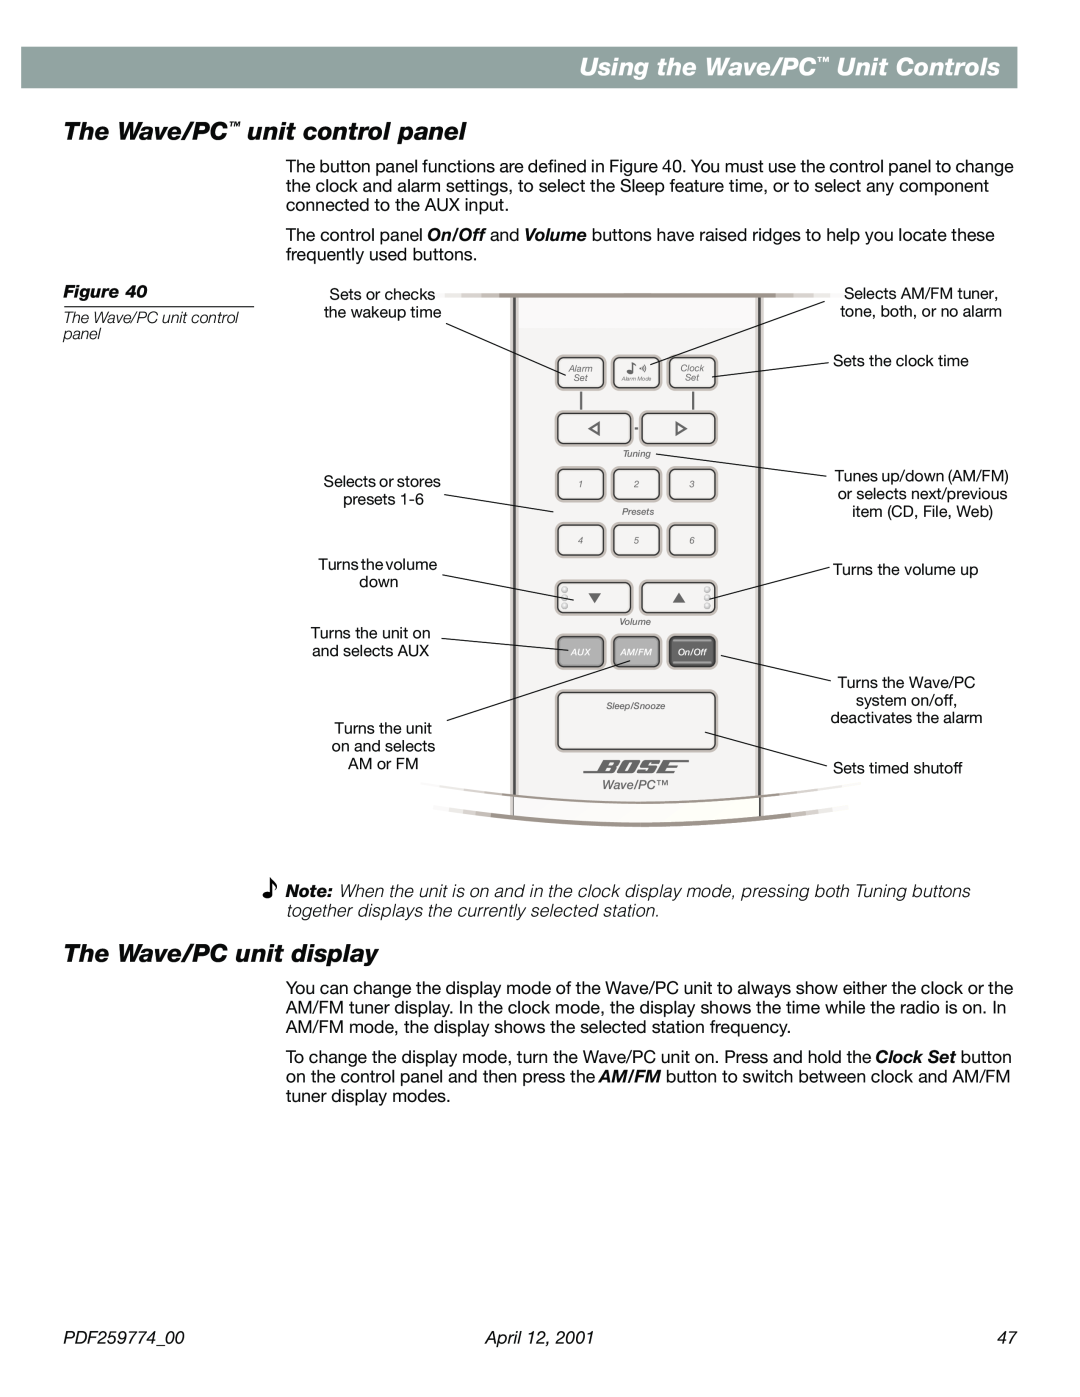 Bose PDF259774_00 manual Using the Wave/PC Unit Controls, The Wave/PC unit control panel, The Wave/PC unit display 